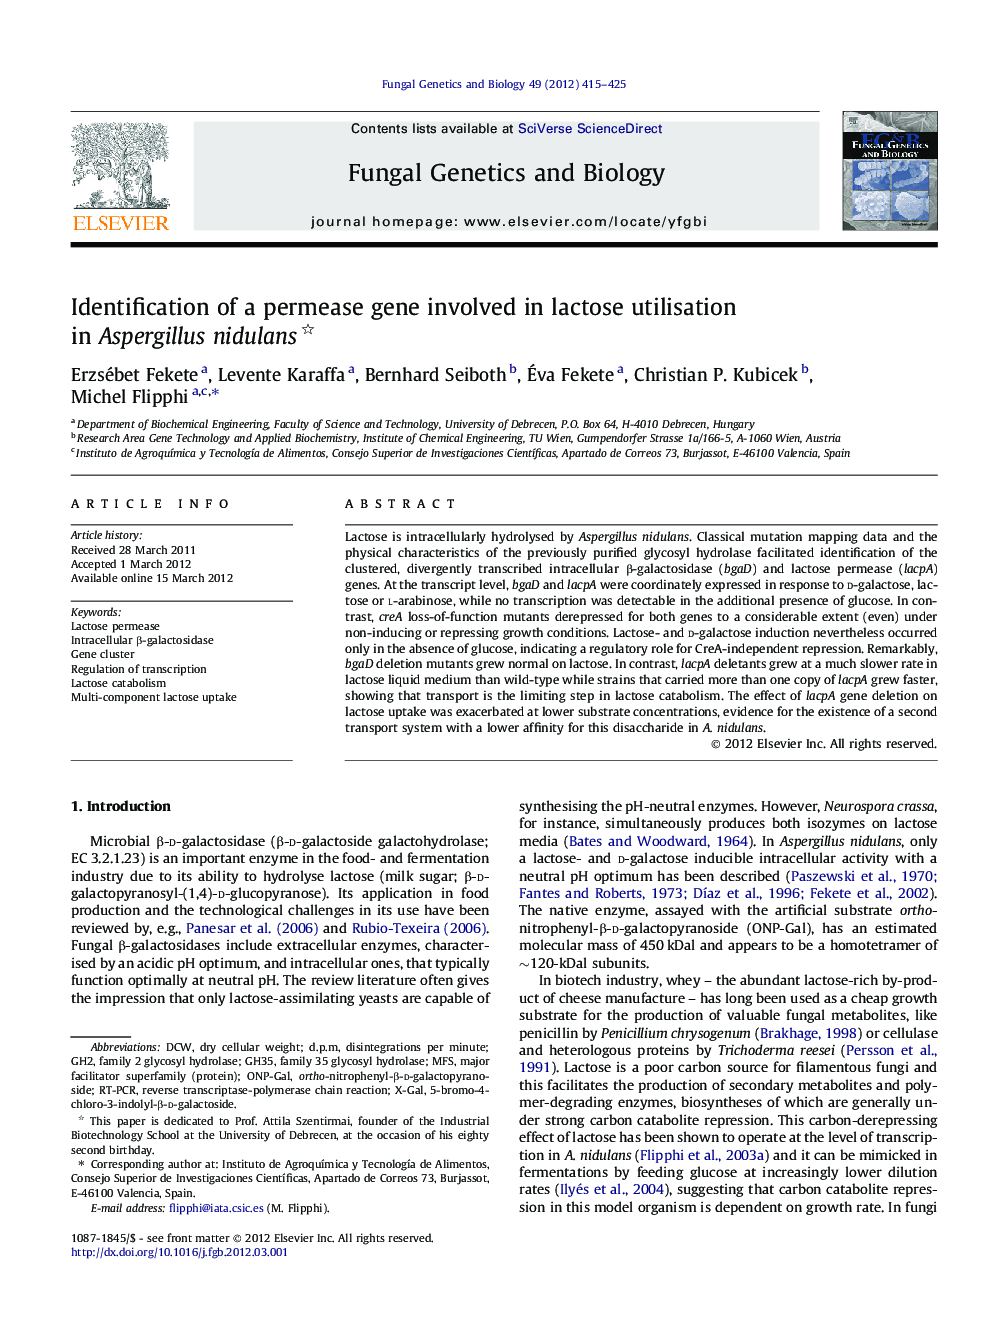 Identification of a permease gene involved in lactose utilisation in Aspergillus nidulans